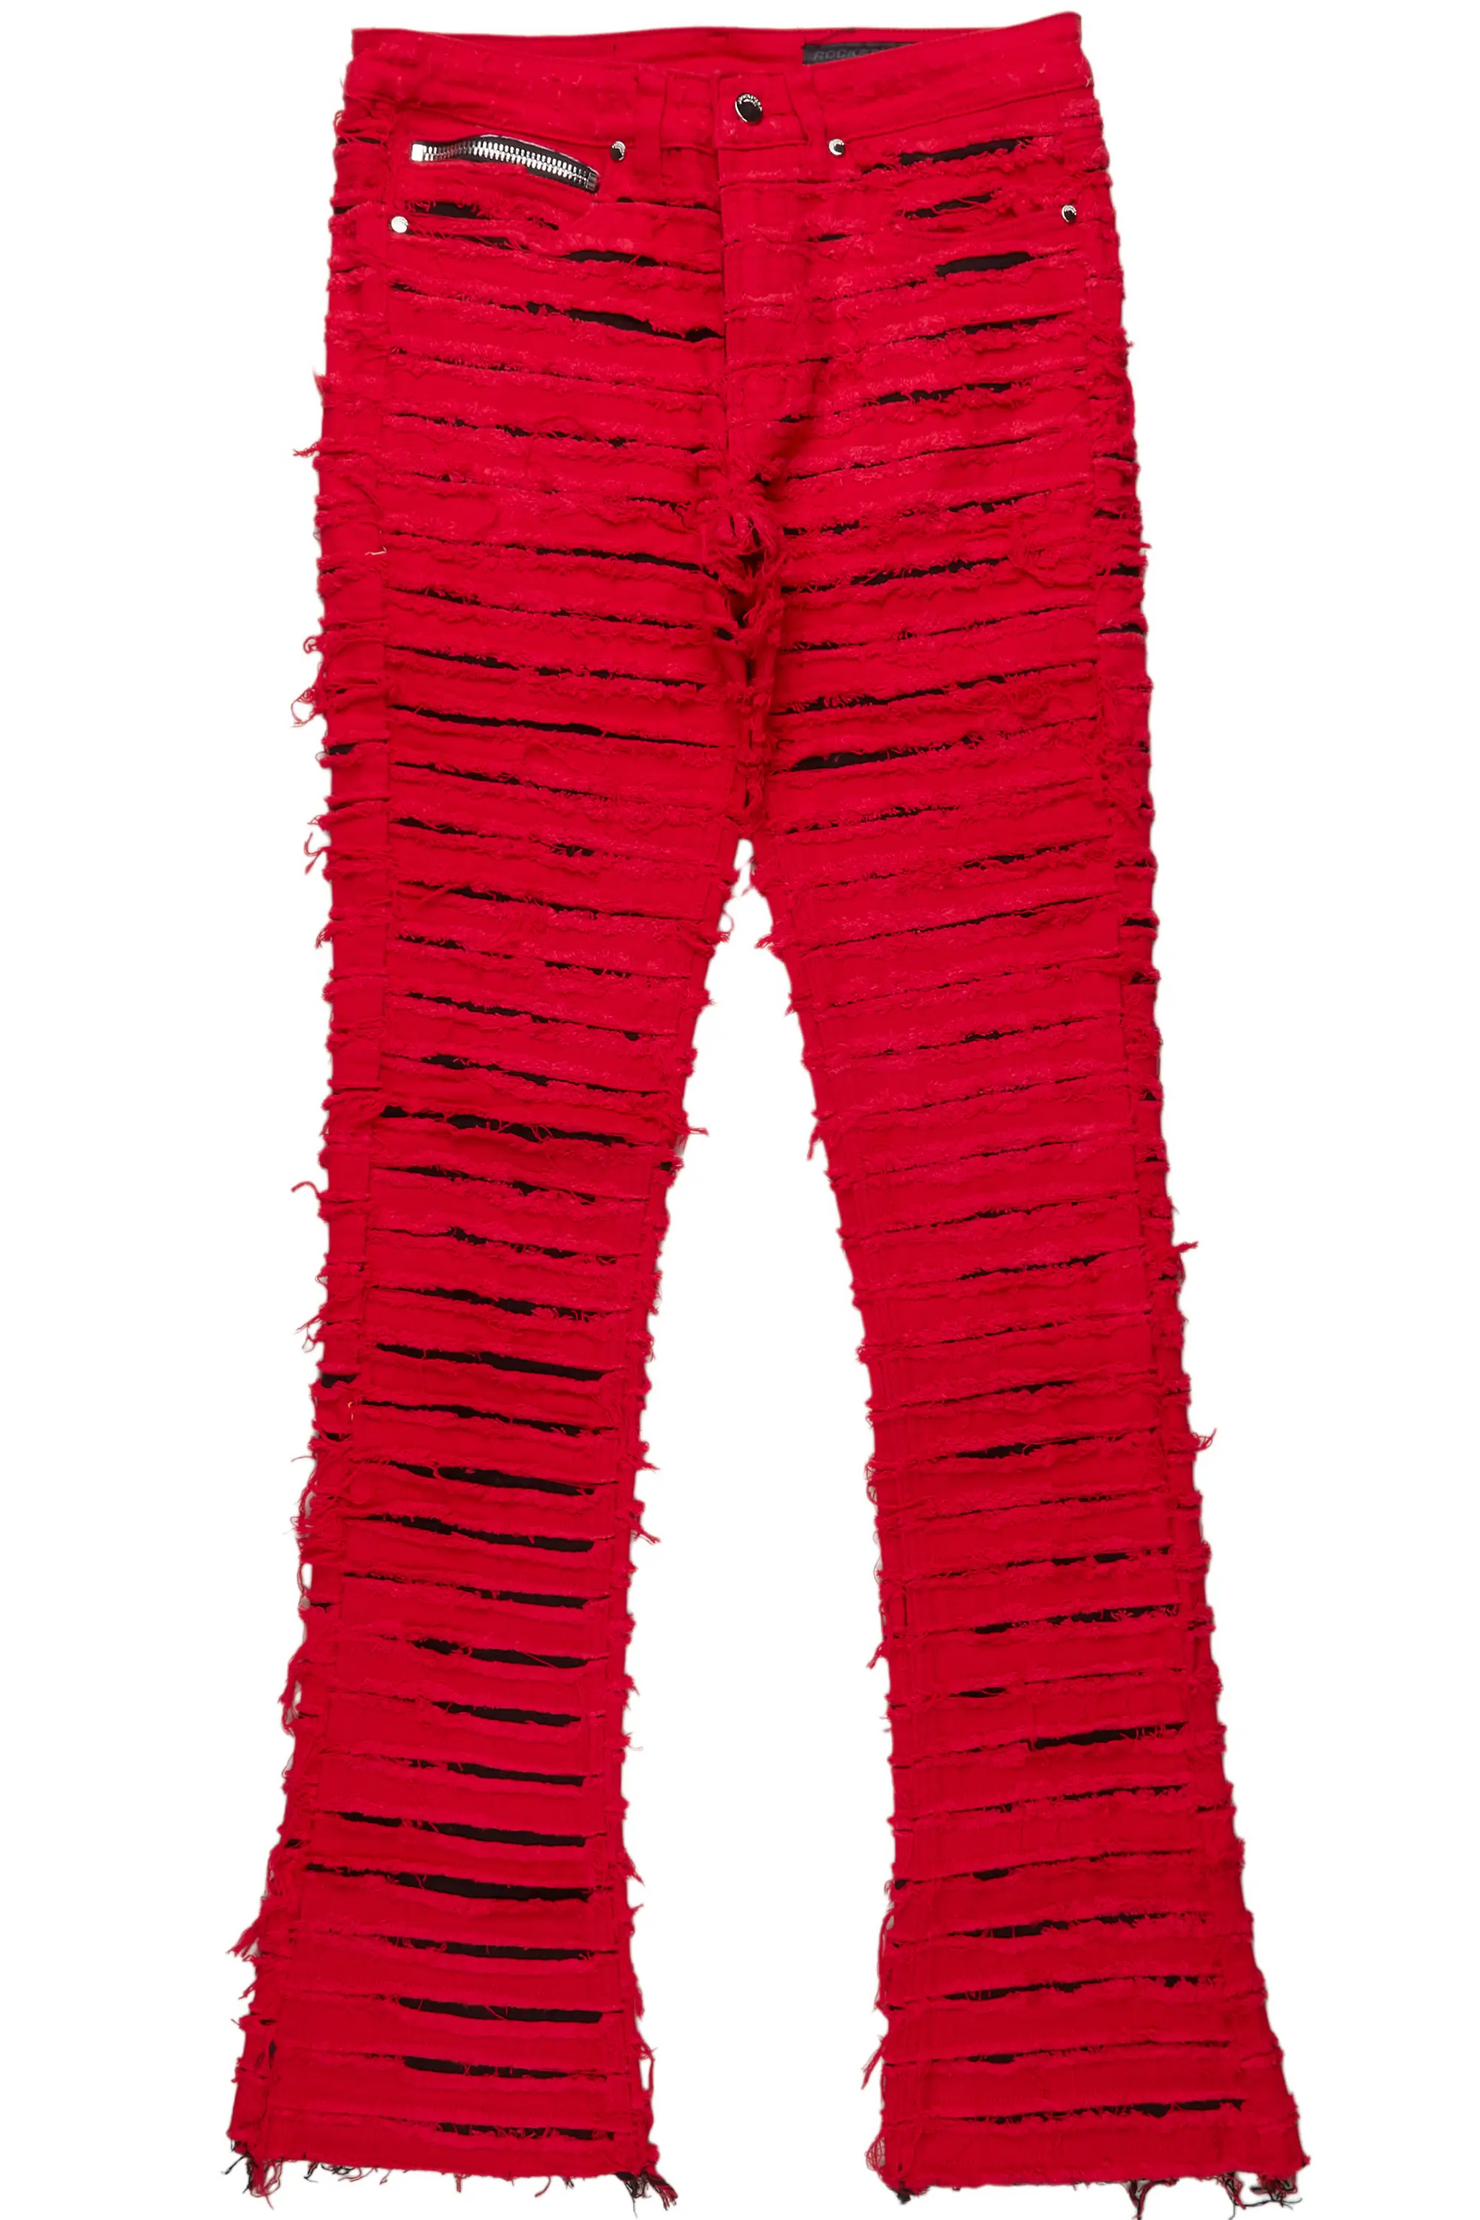 Korren Red/Black Stacked Flare Jean